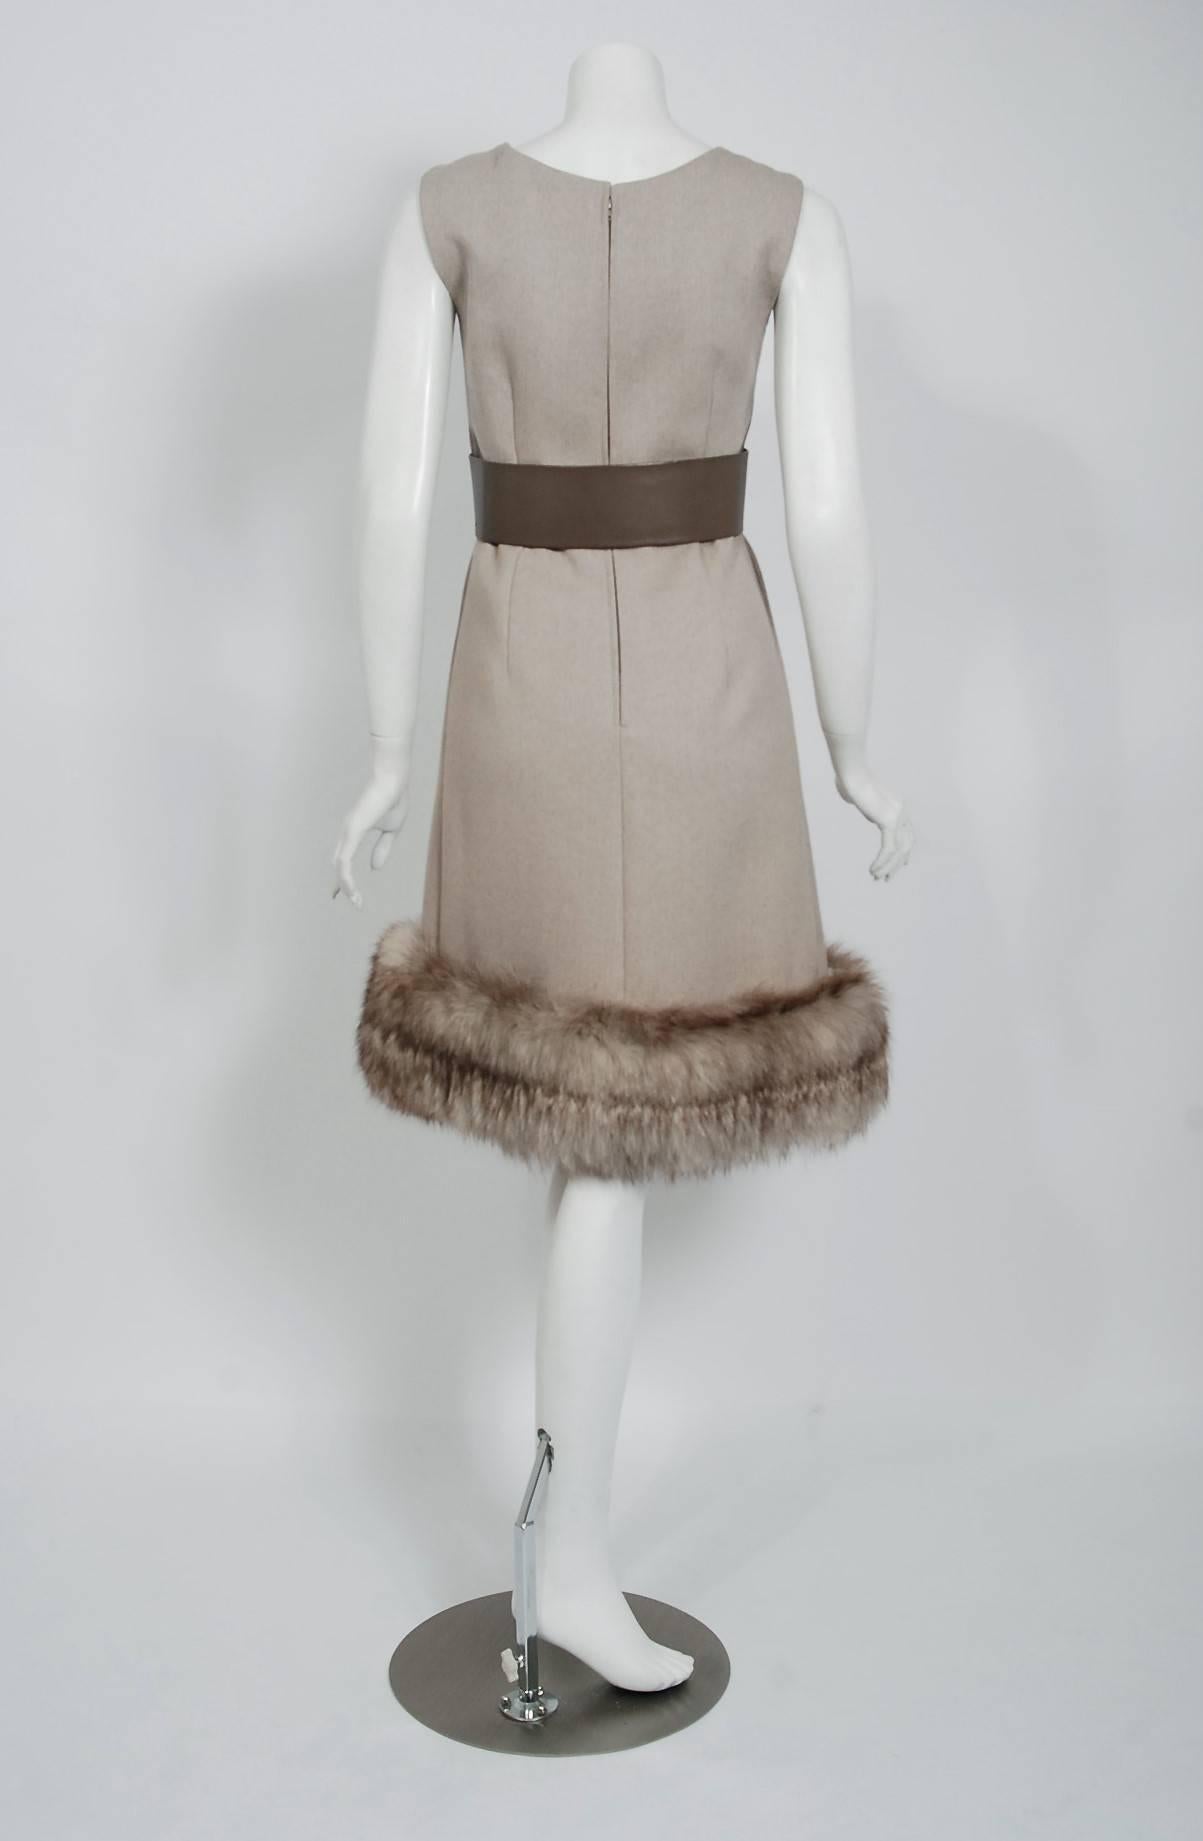 1962 Norman Norell Oatmeal Wool & Genuine Fox-Fur Belted Dress Jacket Ensemble 1